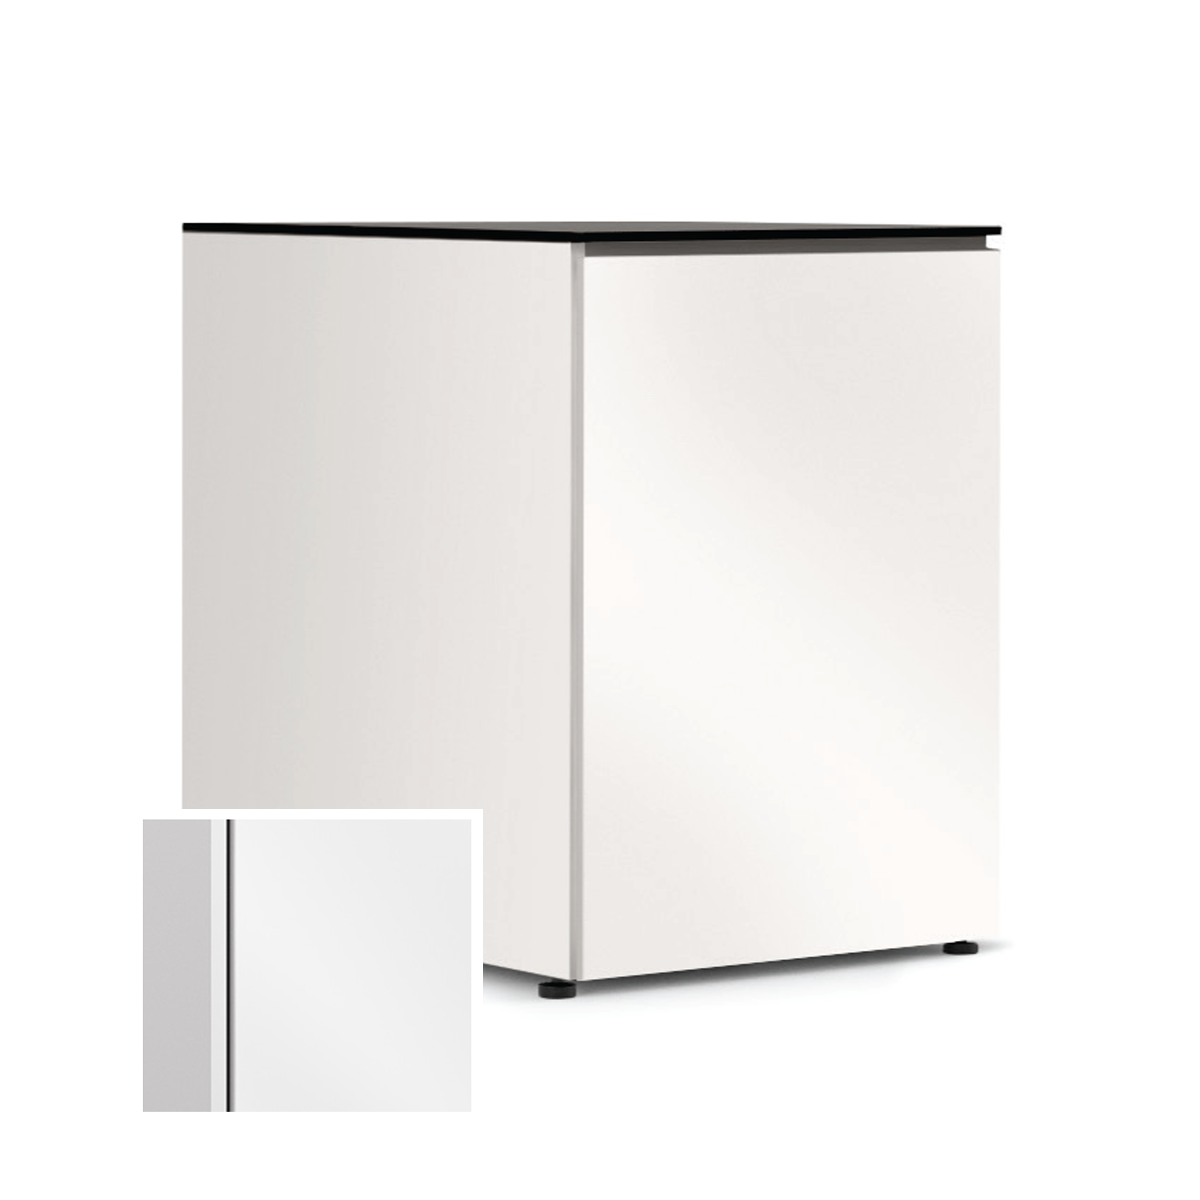 D3/317B/MM/GW Single Bay Deep Profile Cabinet- Gloss White/Black Top